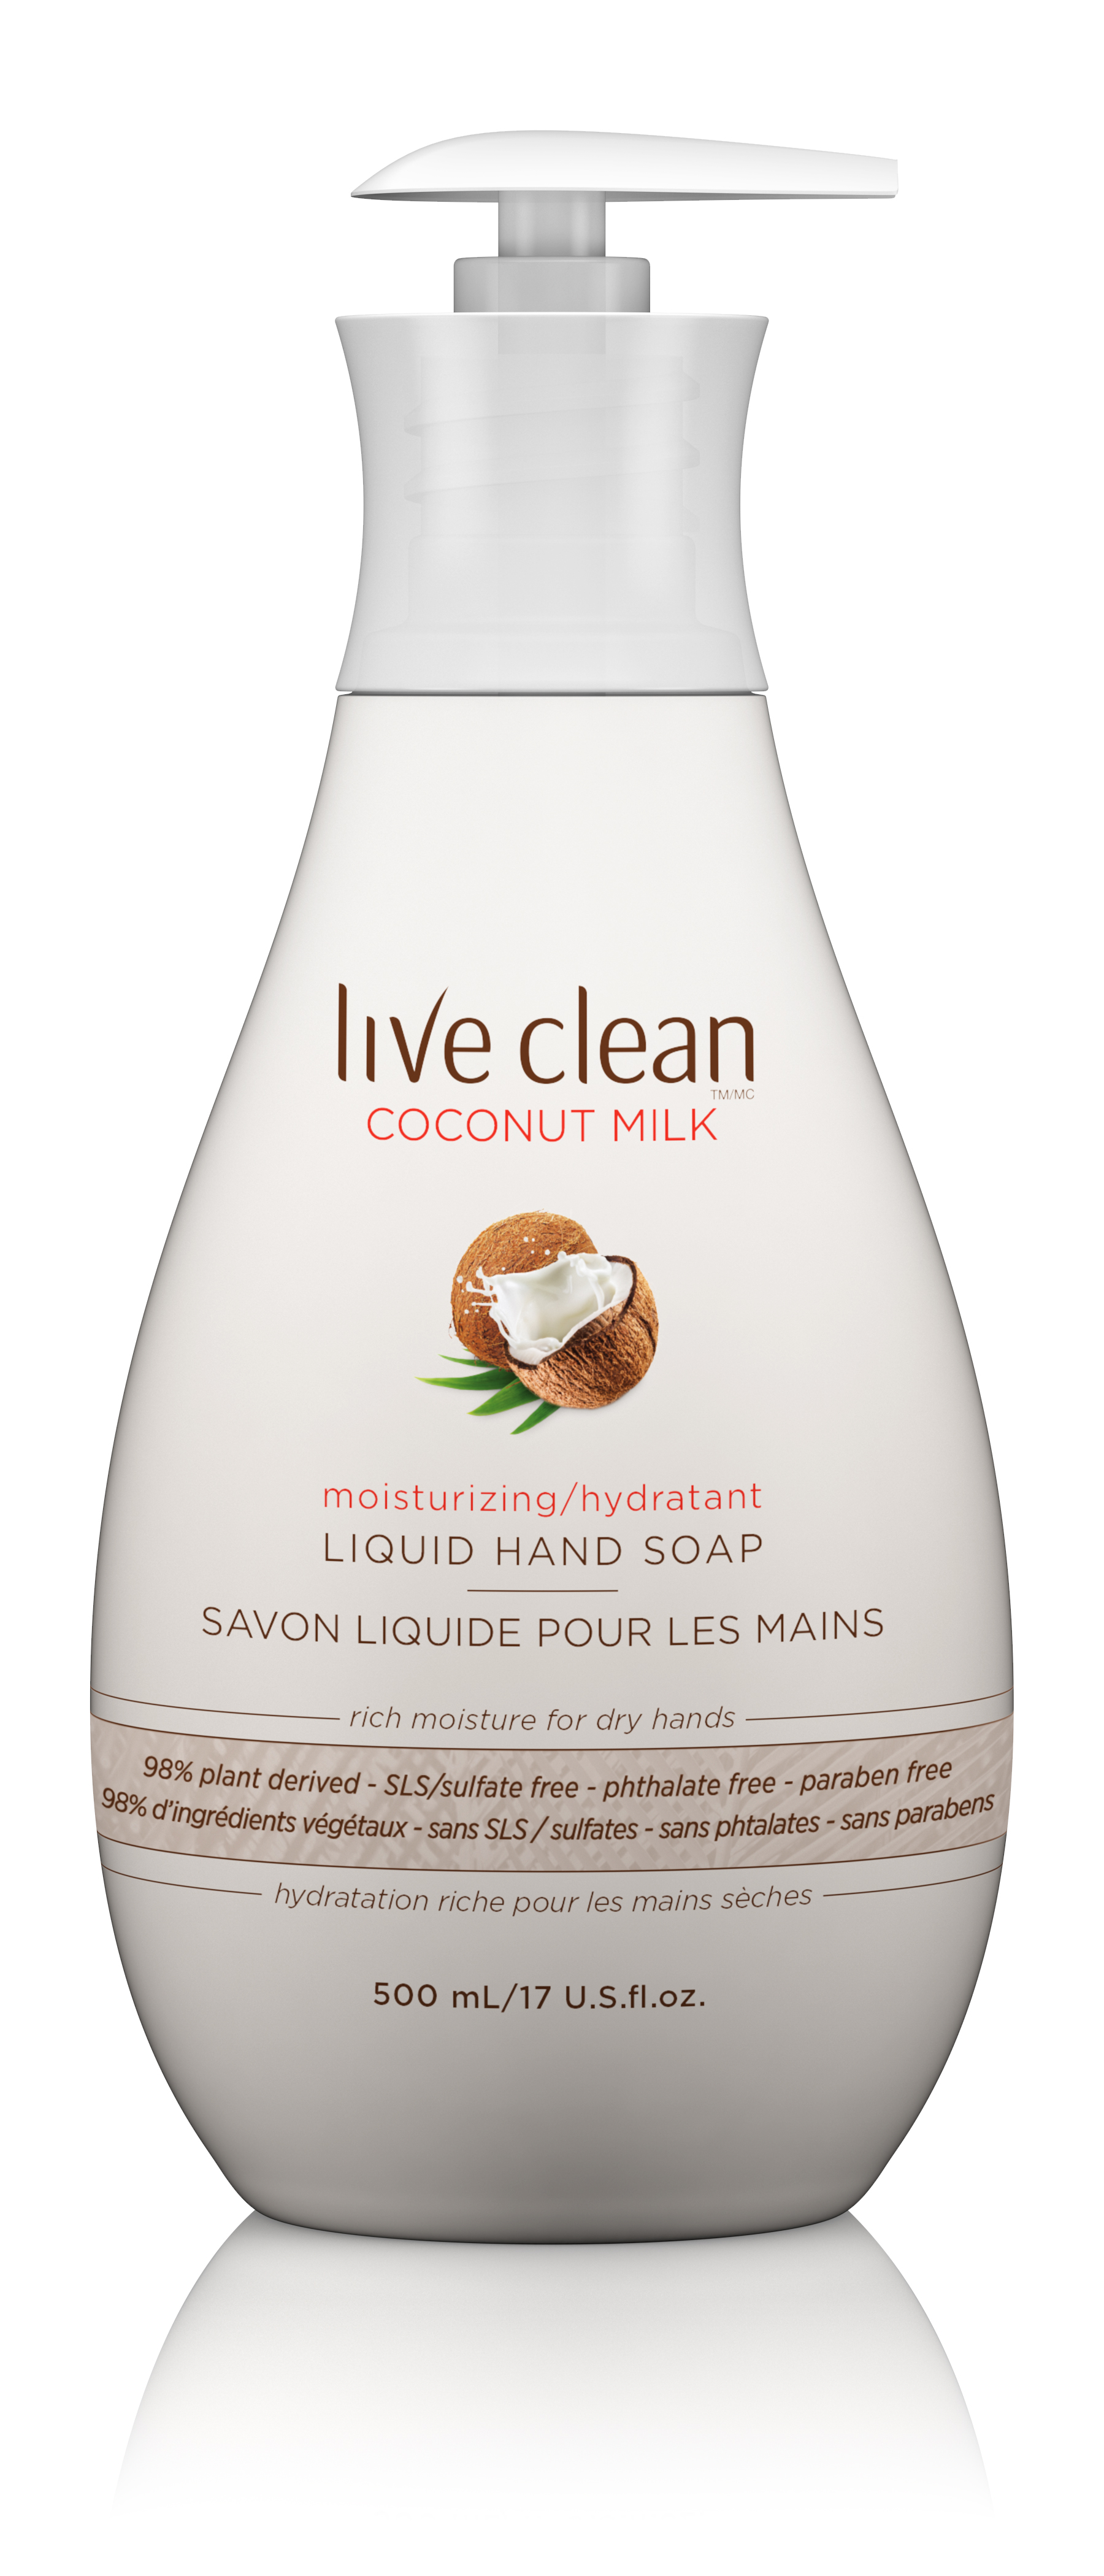 Live Clean Coconut Milk-Moisturizing Liquid Hand Soap by HAIN CELESTIAL